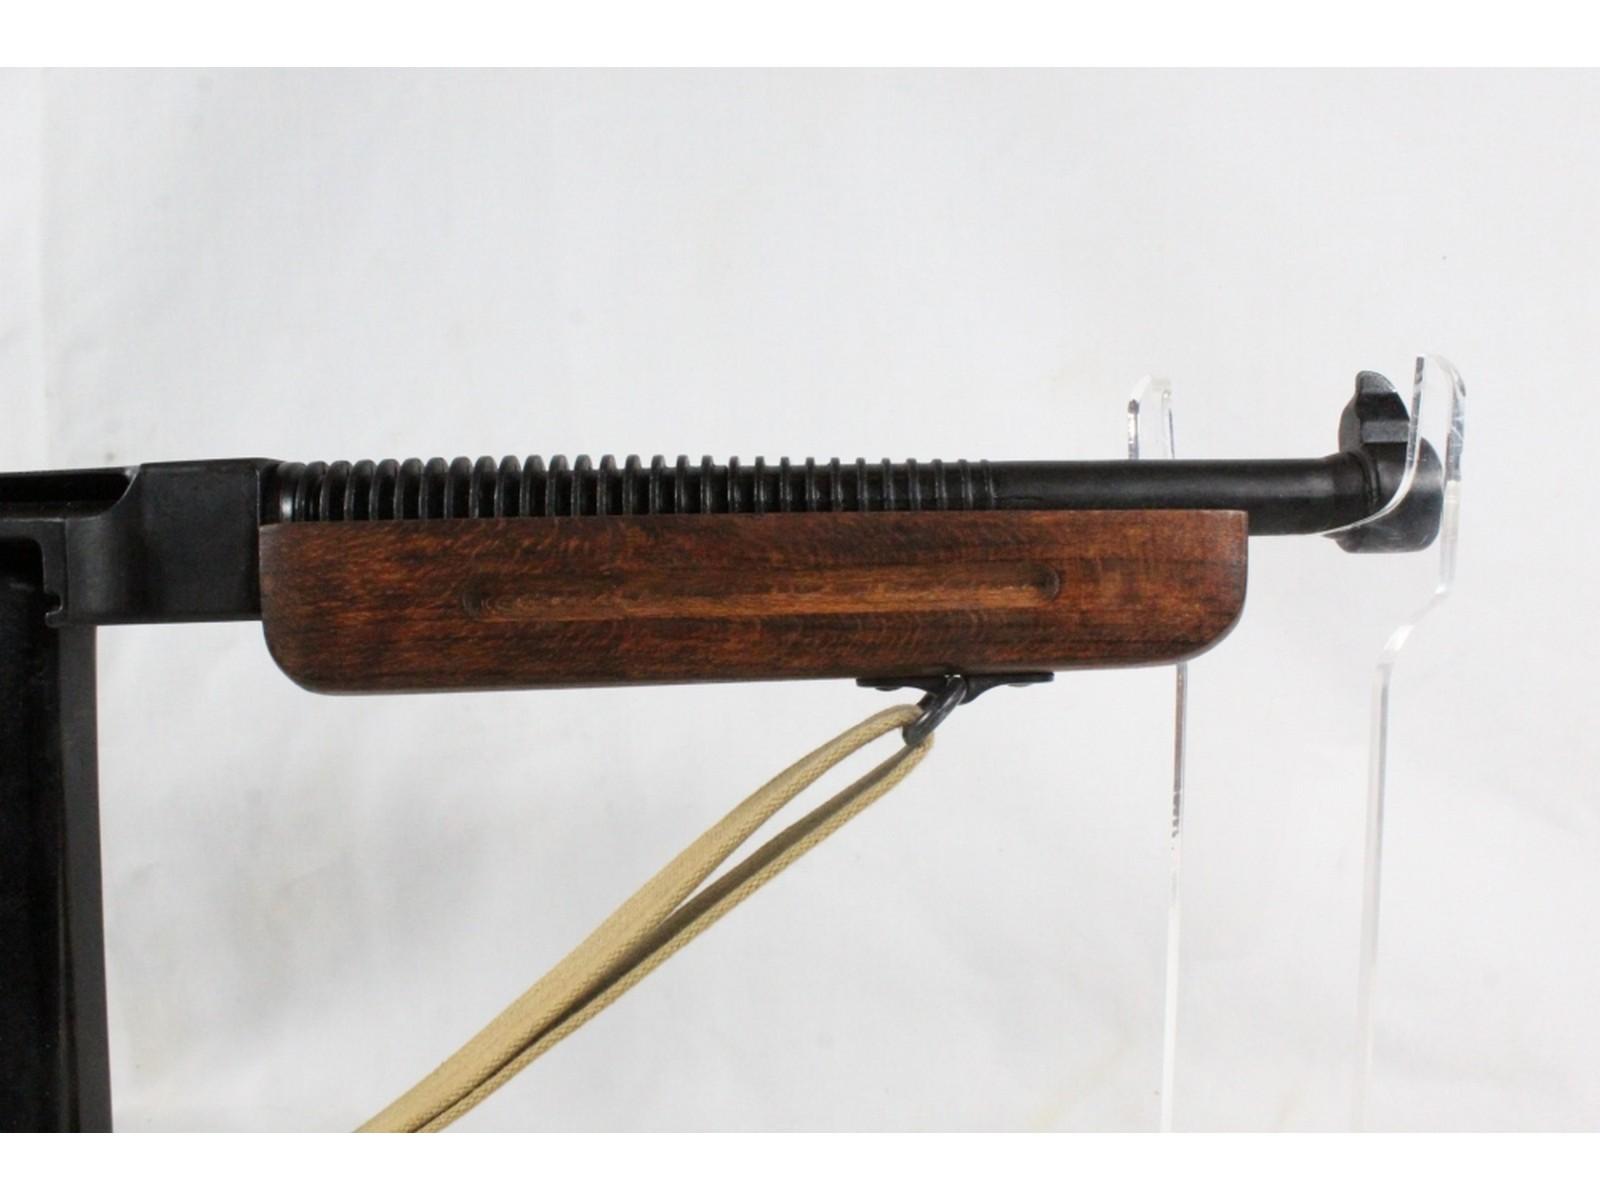 Denix Thompson M1928 Replica